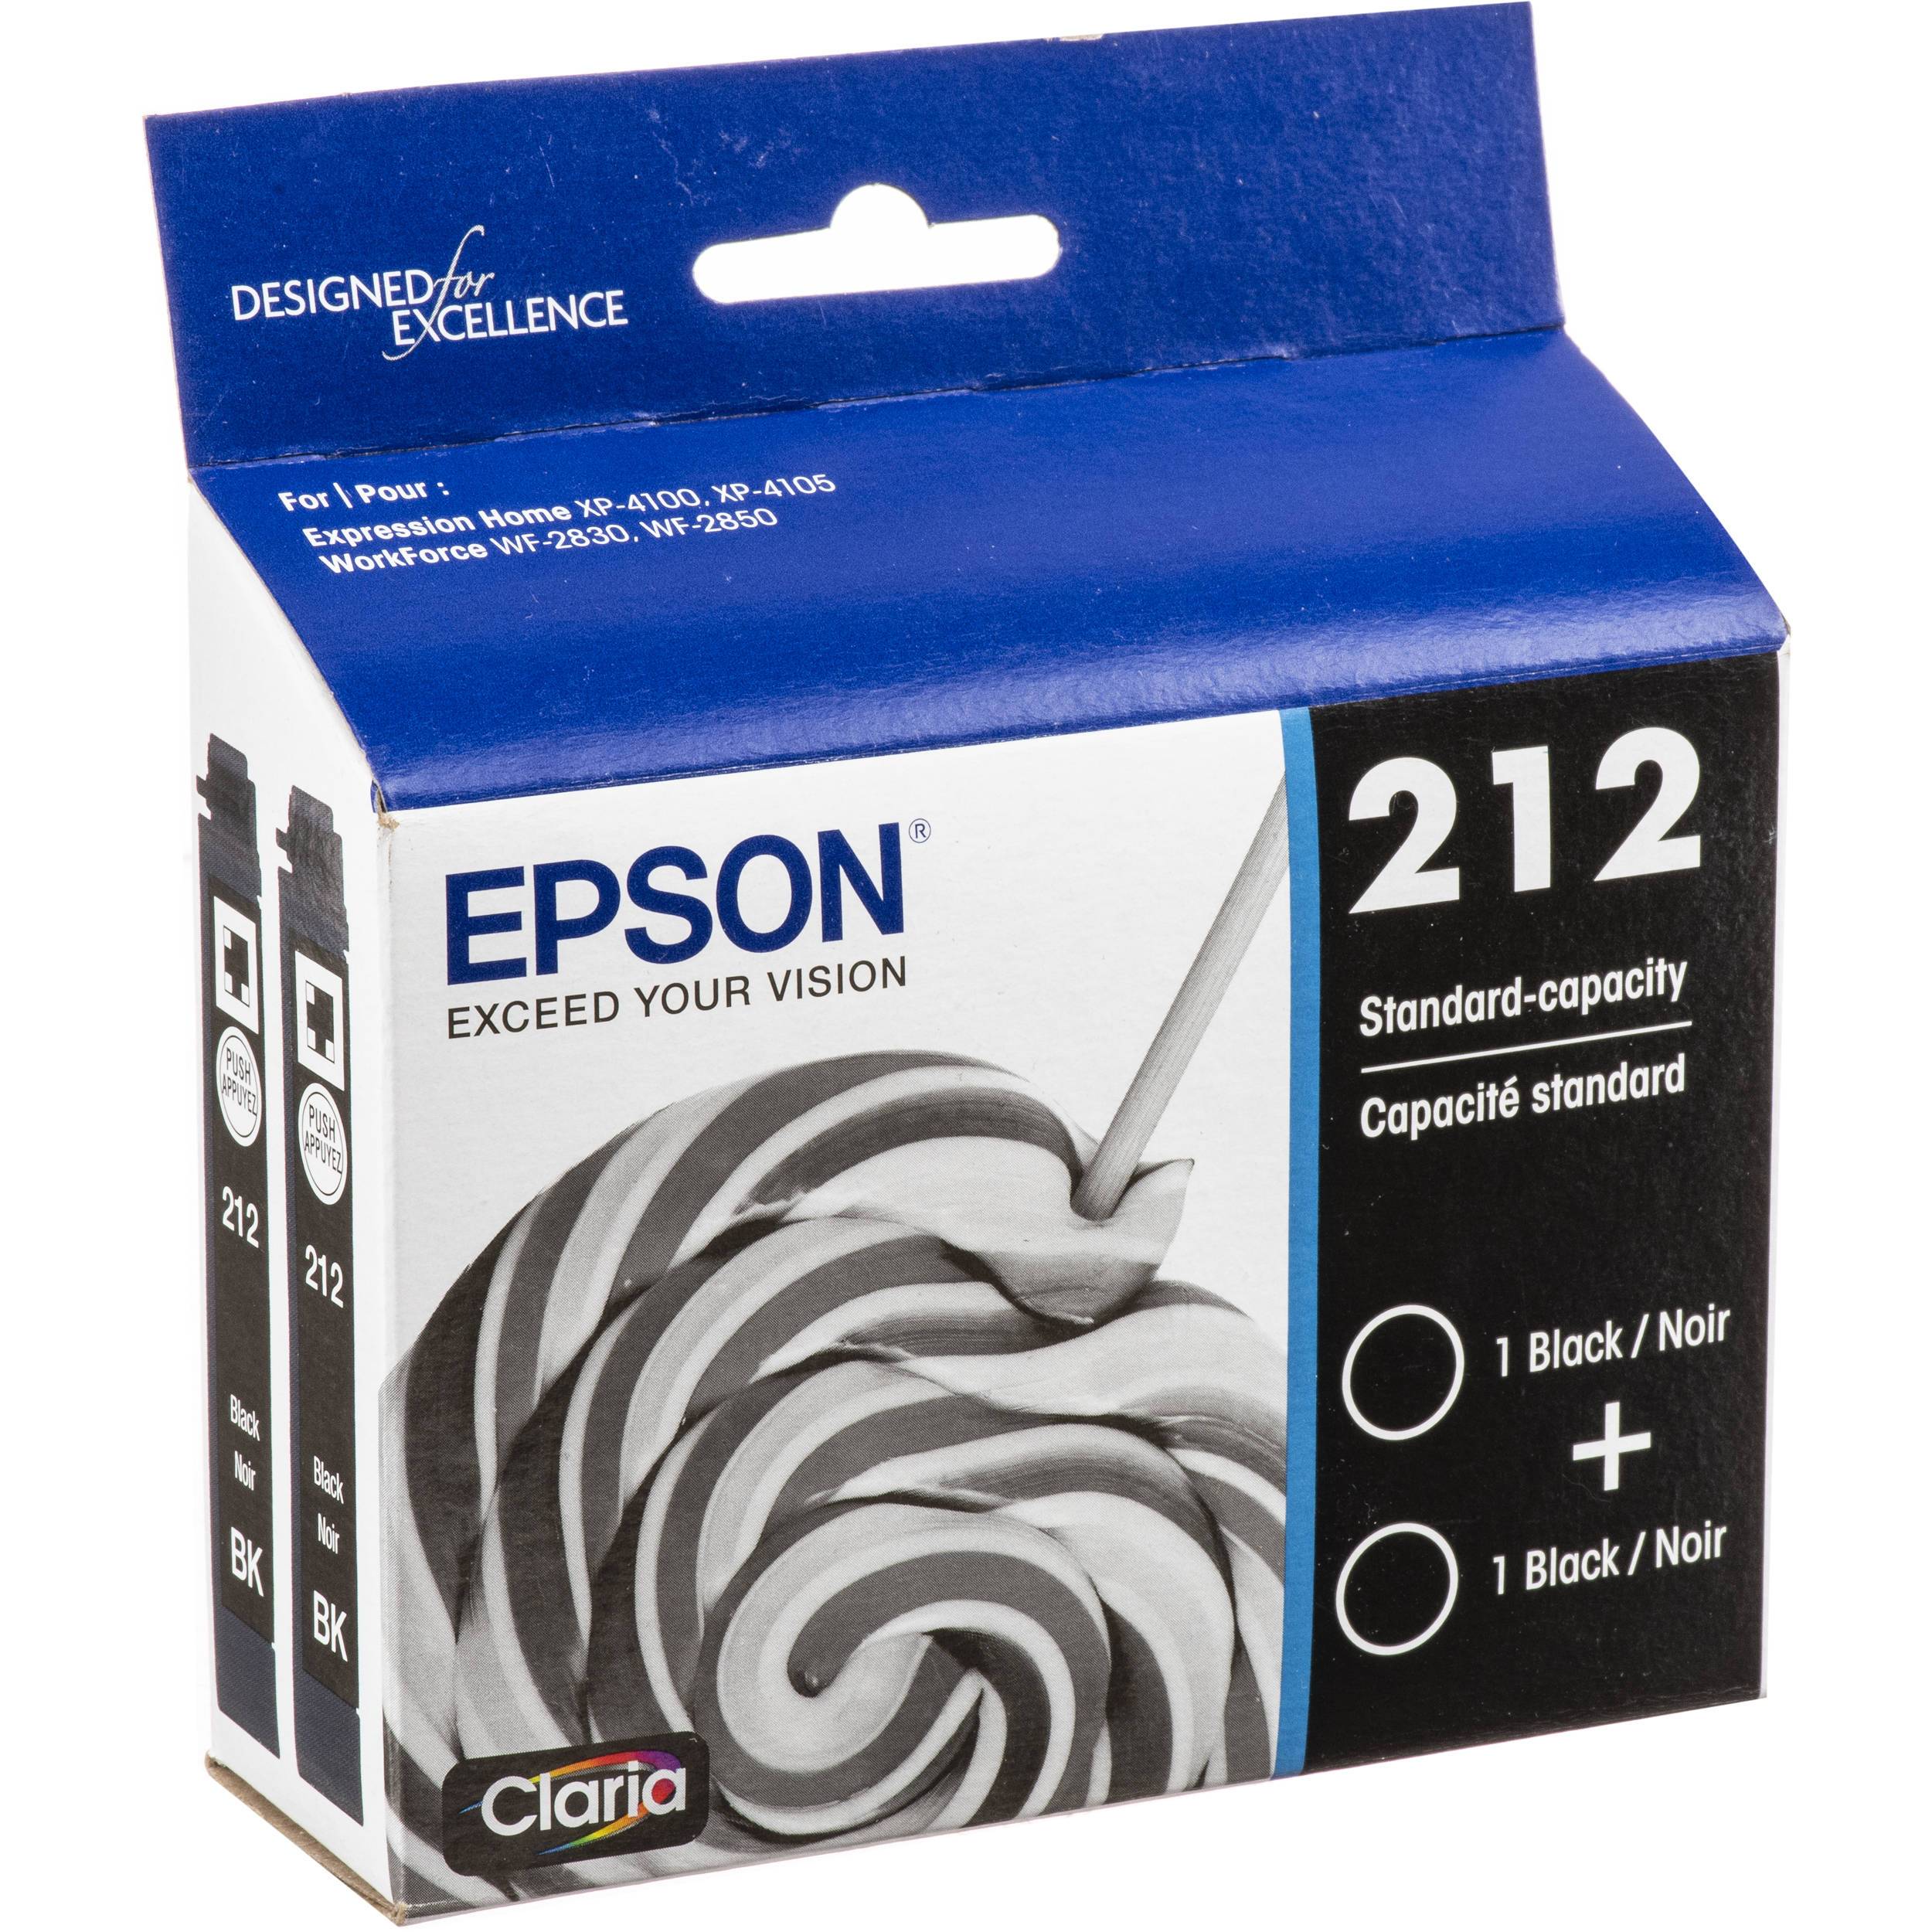 Absolute Toner Epson 202 Original Genuine OEM Durabrite Dual Black Ink Cartridge | T212120D2 Original Epson Cartridge